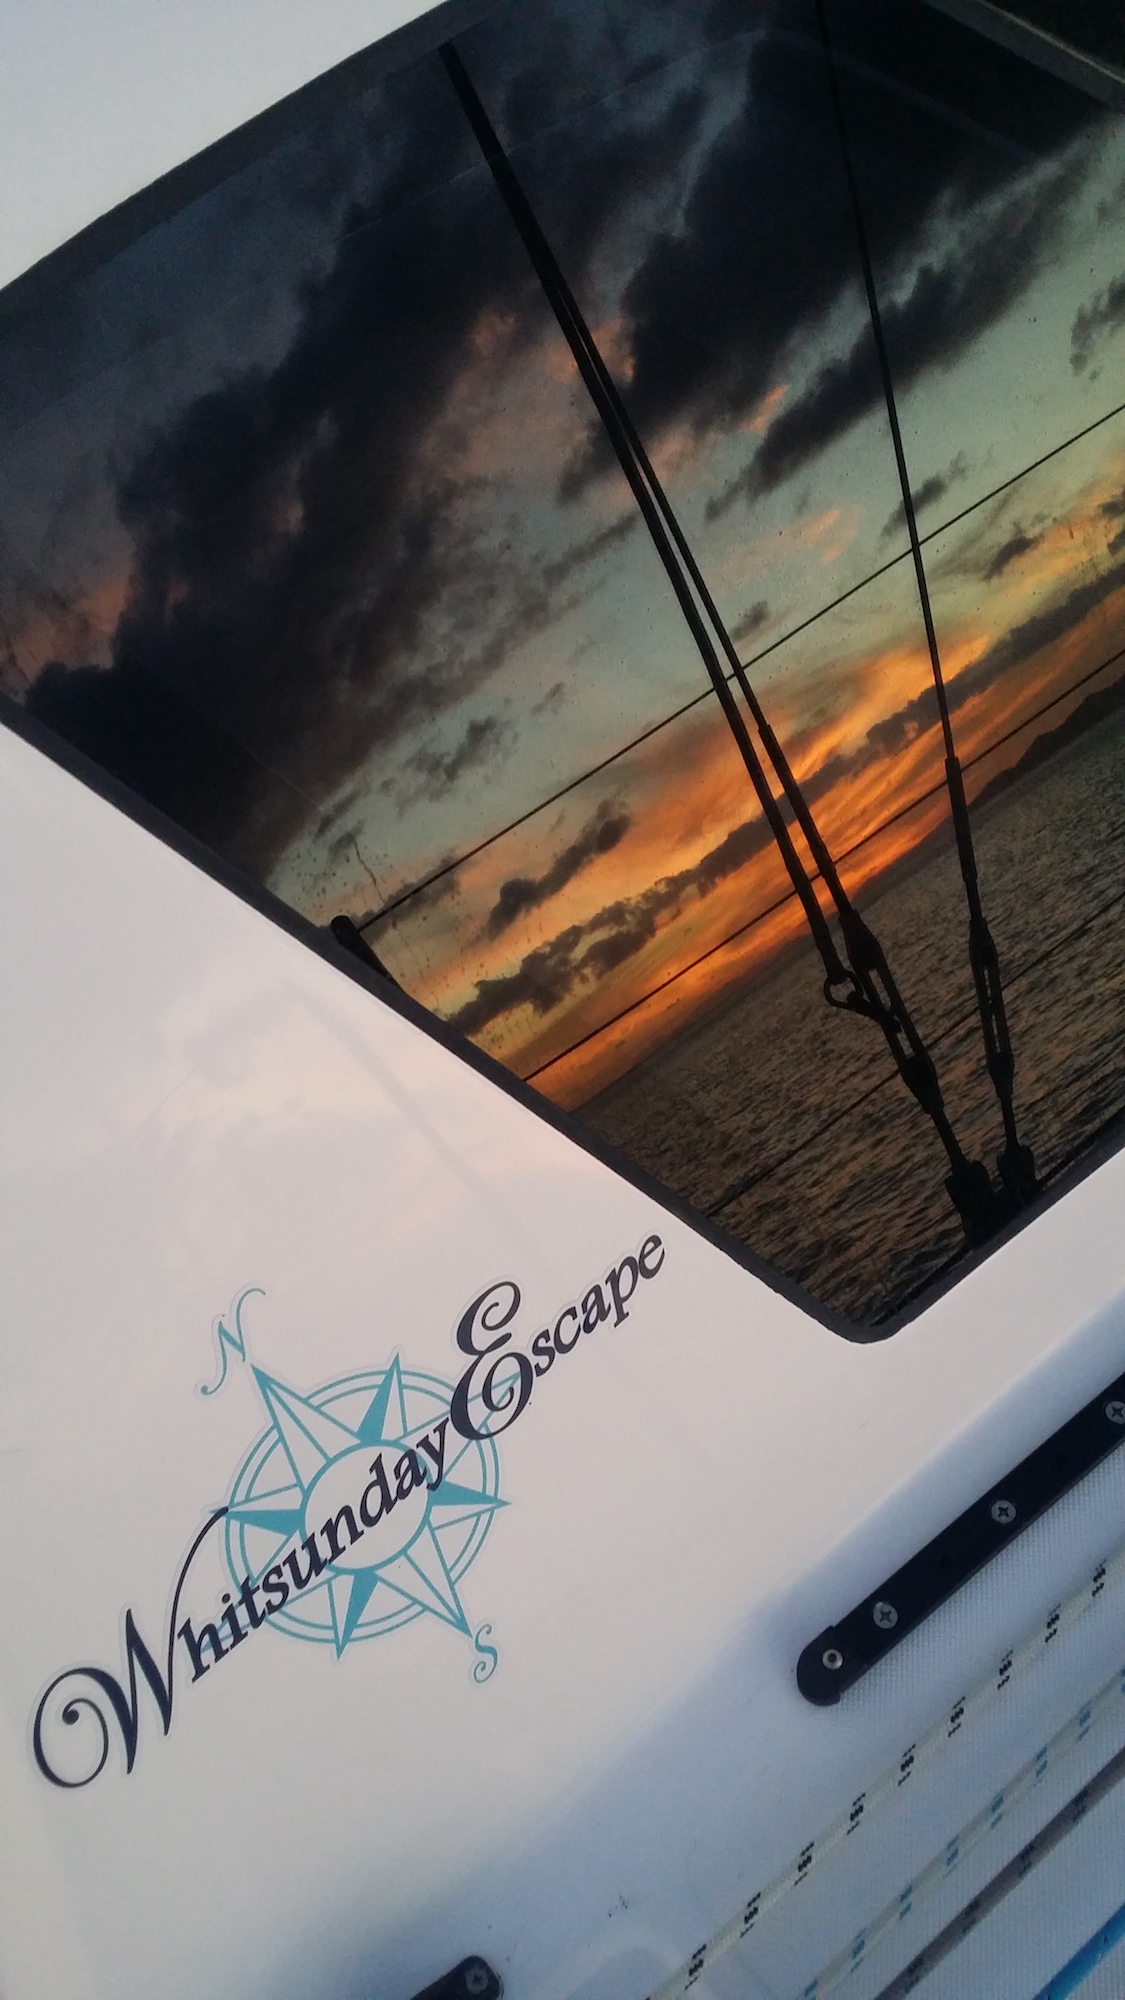 sunset reflection in Whitsunday Escape Seawind 1160 3 Lite sailing catamaran